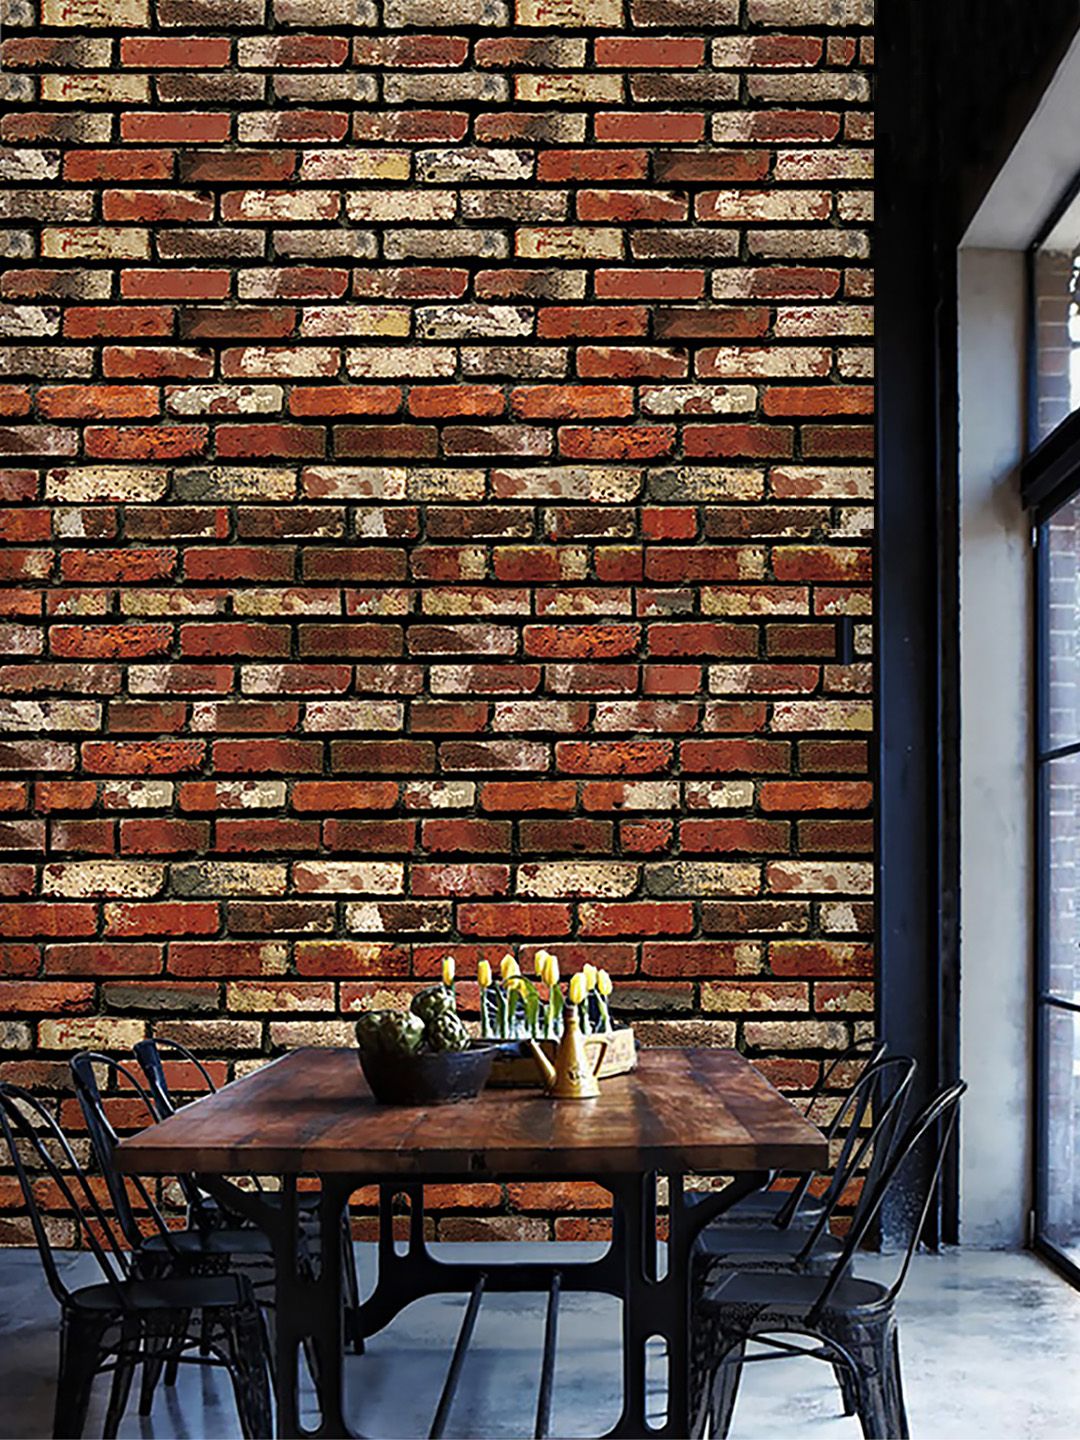 Jaamso Royals Brown Brick Self Adhesive Removable Wallpaper Price in India